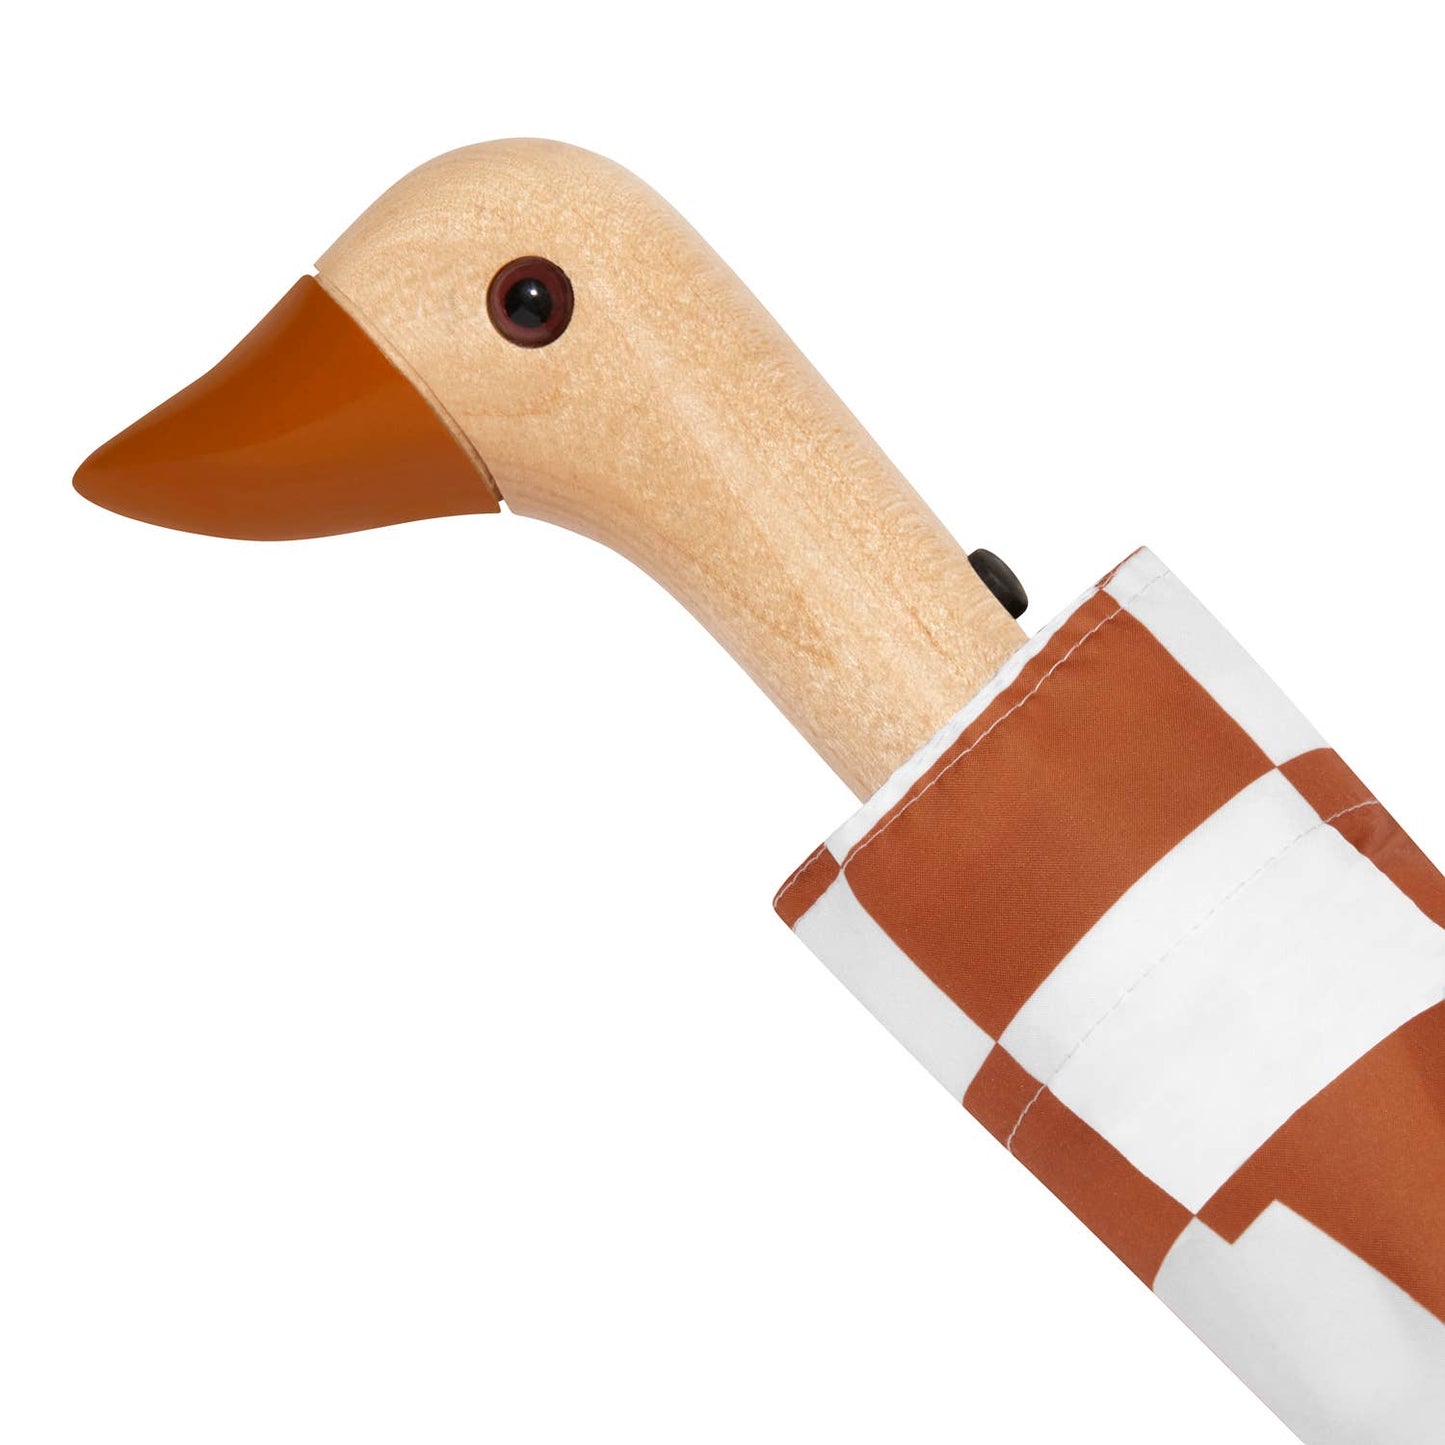 Original Duckhead  - Peanut Butter Checkers Eco-Friendly Duck Umbrella